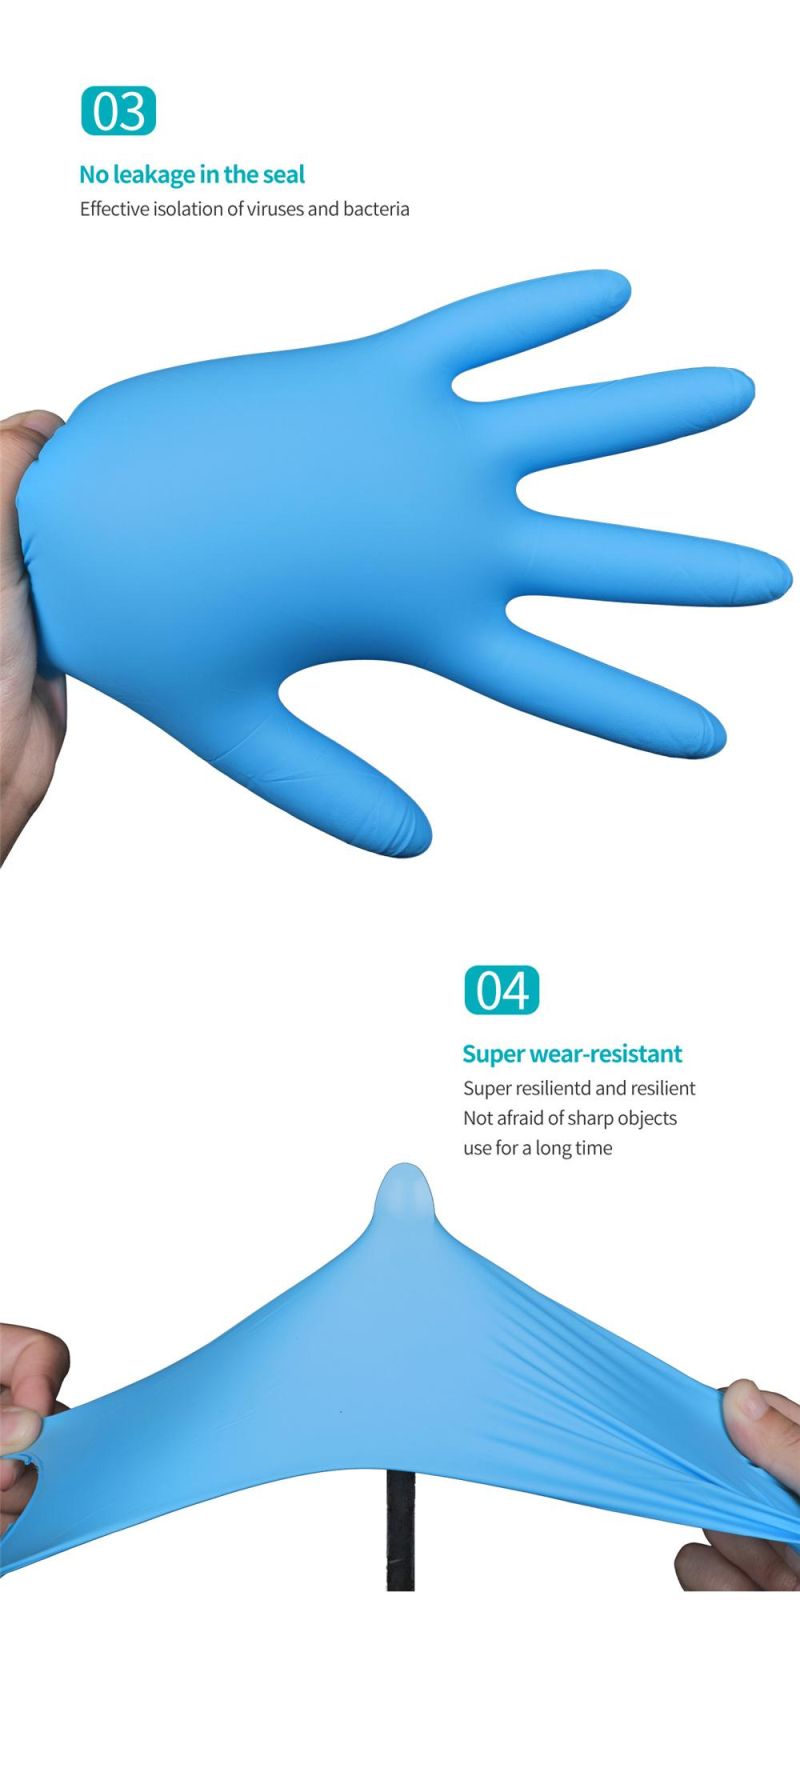 Disposabl Examination Gloves Blue Powder Free Medical/ Non Medical Nitrile Gloves